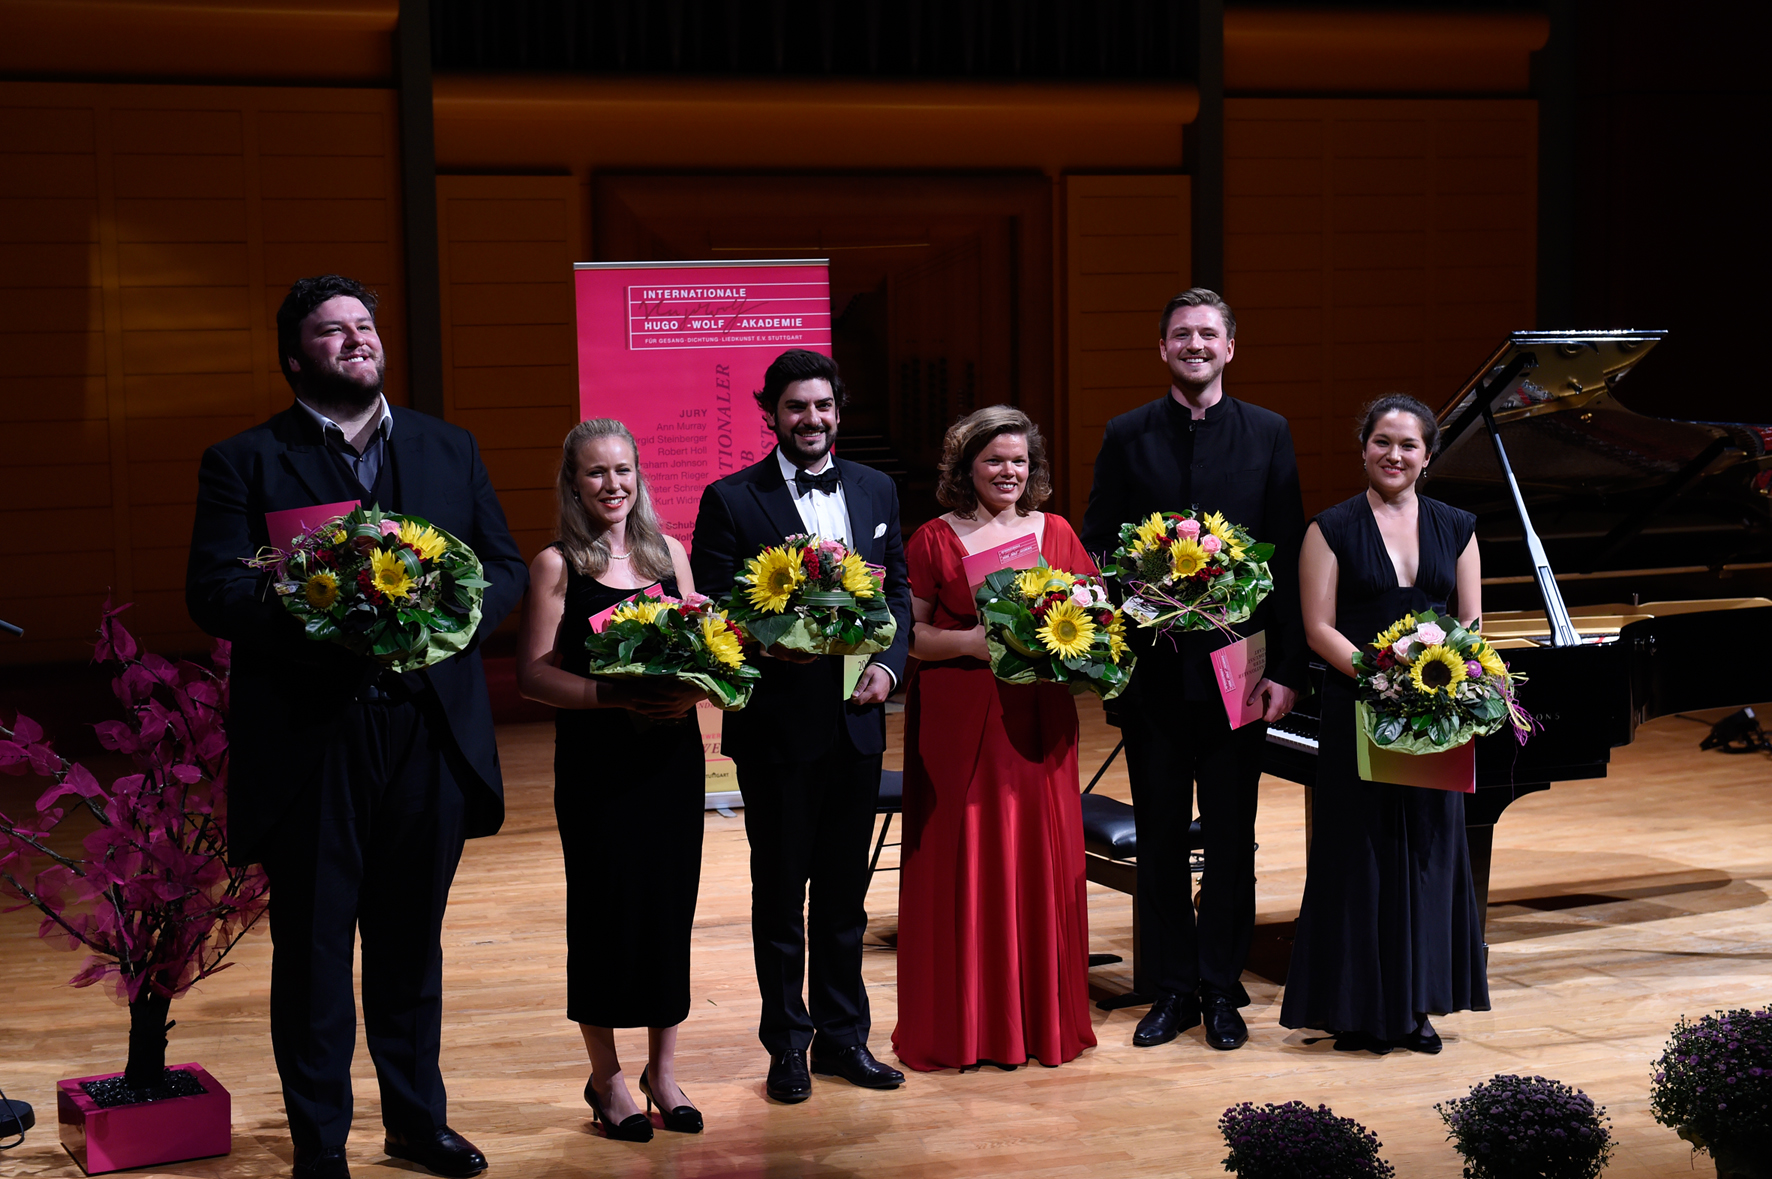 The winners in 2016 were: 1st prize: Ilker Arcayürek (tenor) & Fiona Pollak (piano), 2nd prize: Stuart Jackson (tenor) & Jocelyn Freeman (piano), 3rd prize: Samuel Hasselhorn (baritone) & Renate Rohlfing (piano)